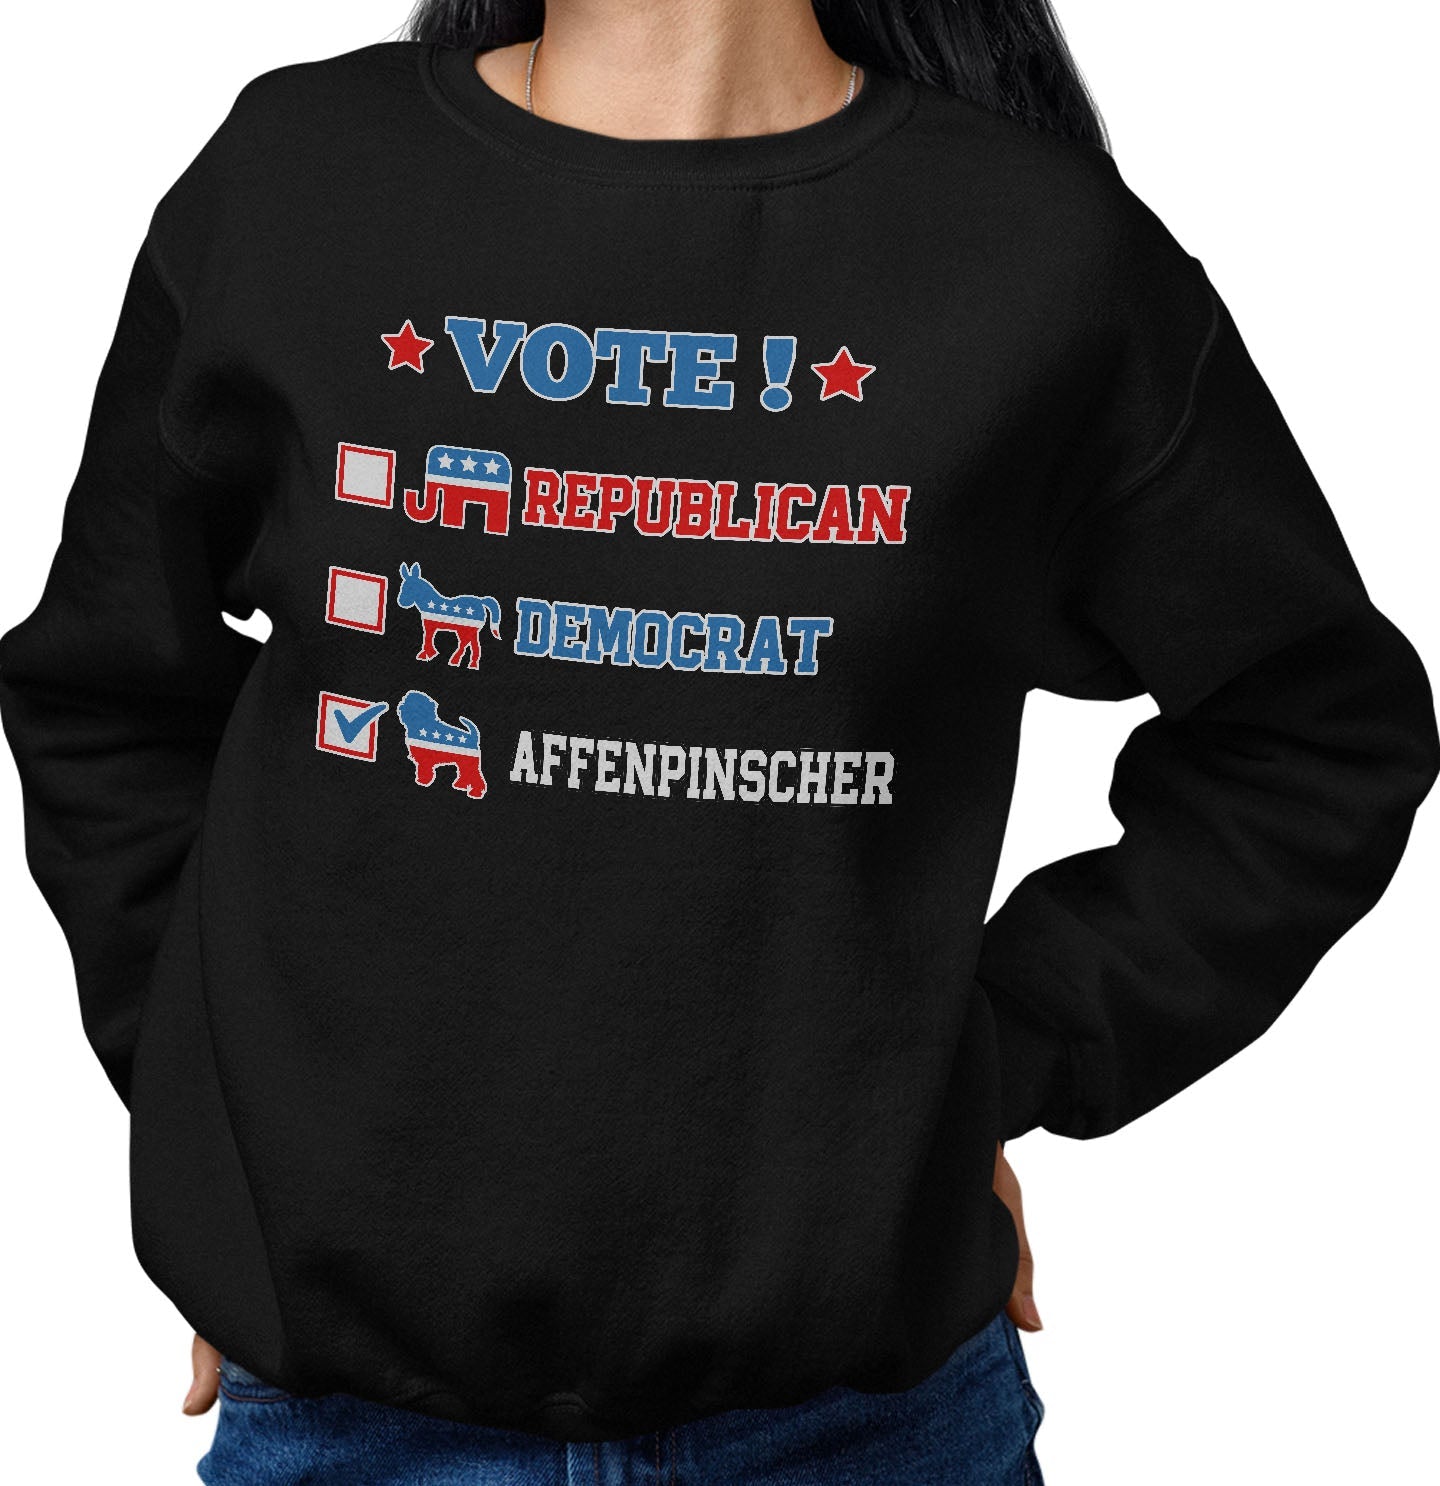 Vote for the Dog - Personalized Custom Adult Unisex Crewneck Sweatshirt